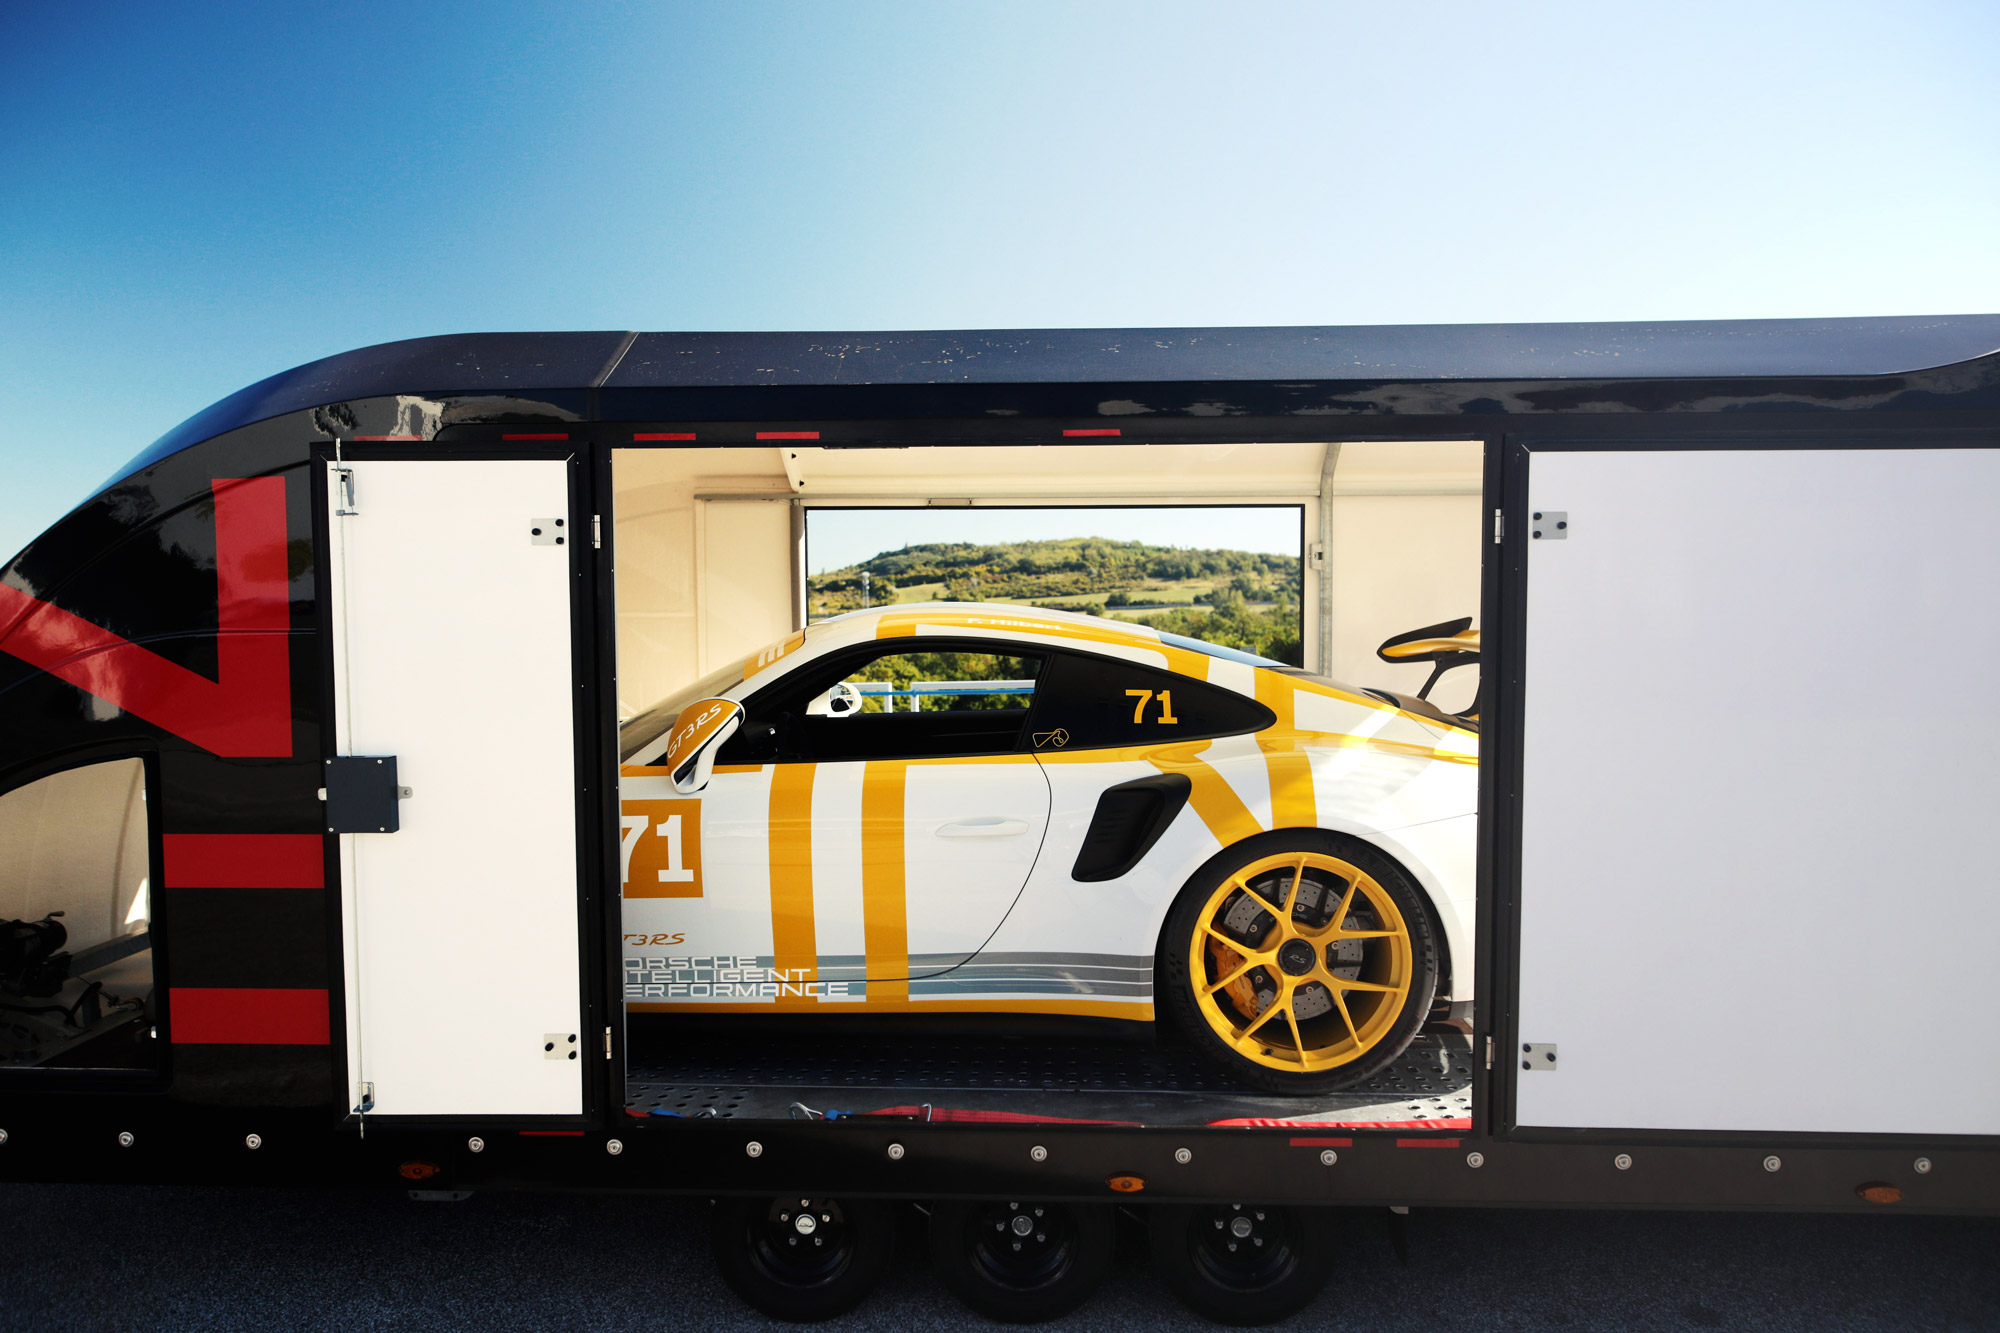 Porsche 911 GT3 RS loaded on a van